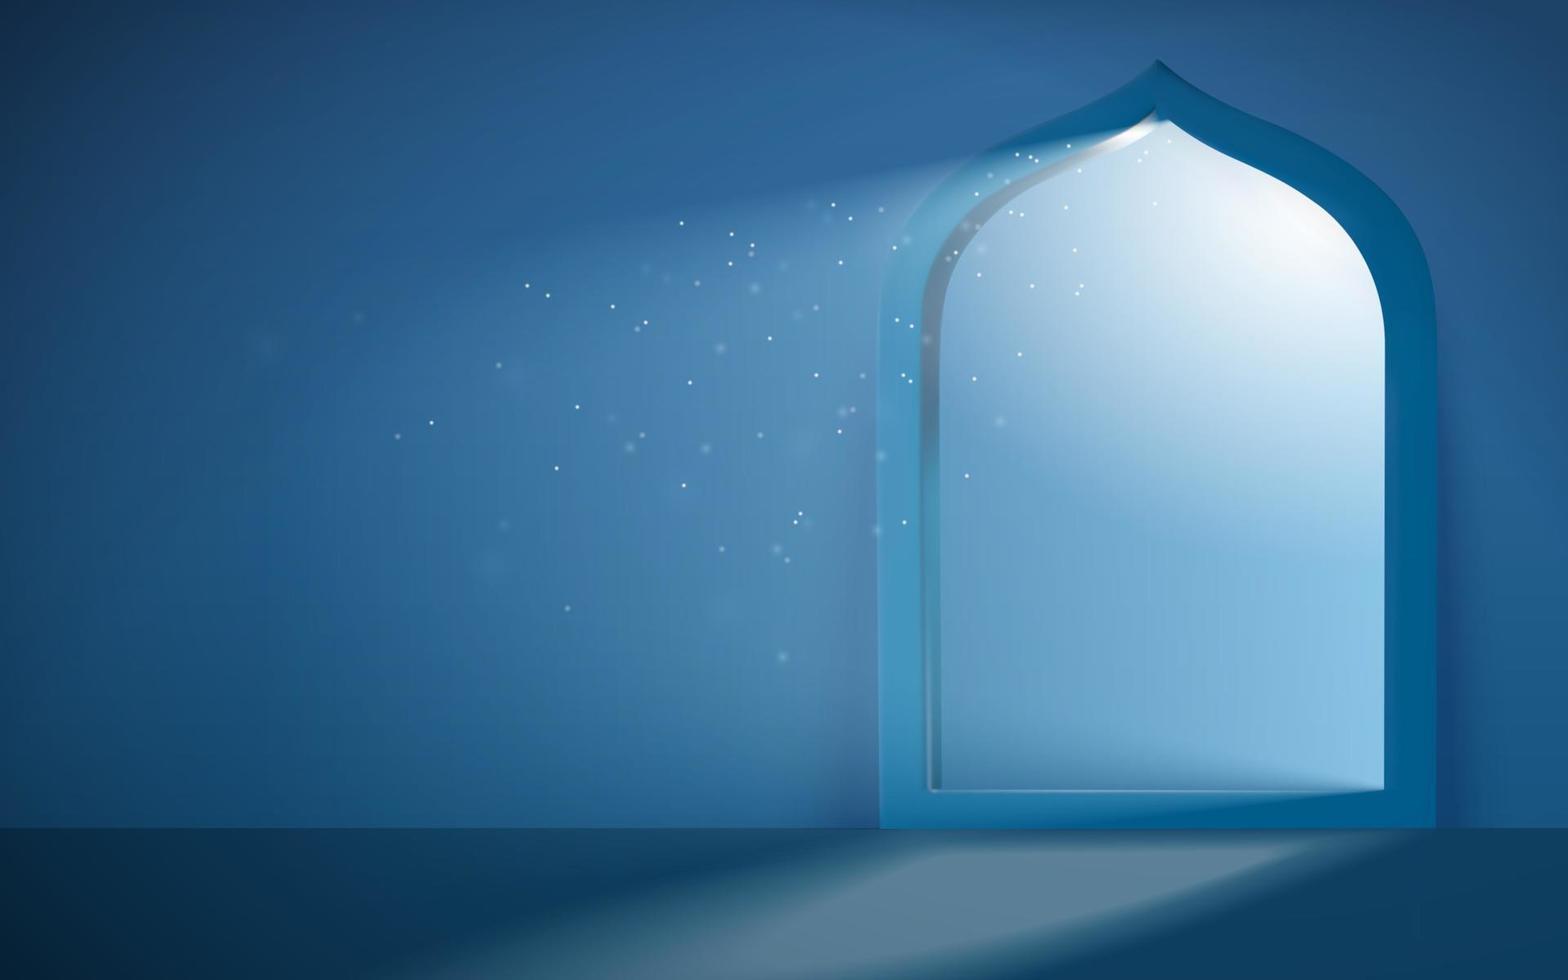 Islam theme background in 3d design. Silver moonlight shimmering through mosque portal. Concept of serene Ramadan evening. vector